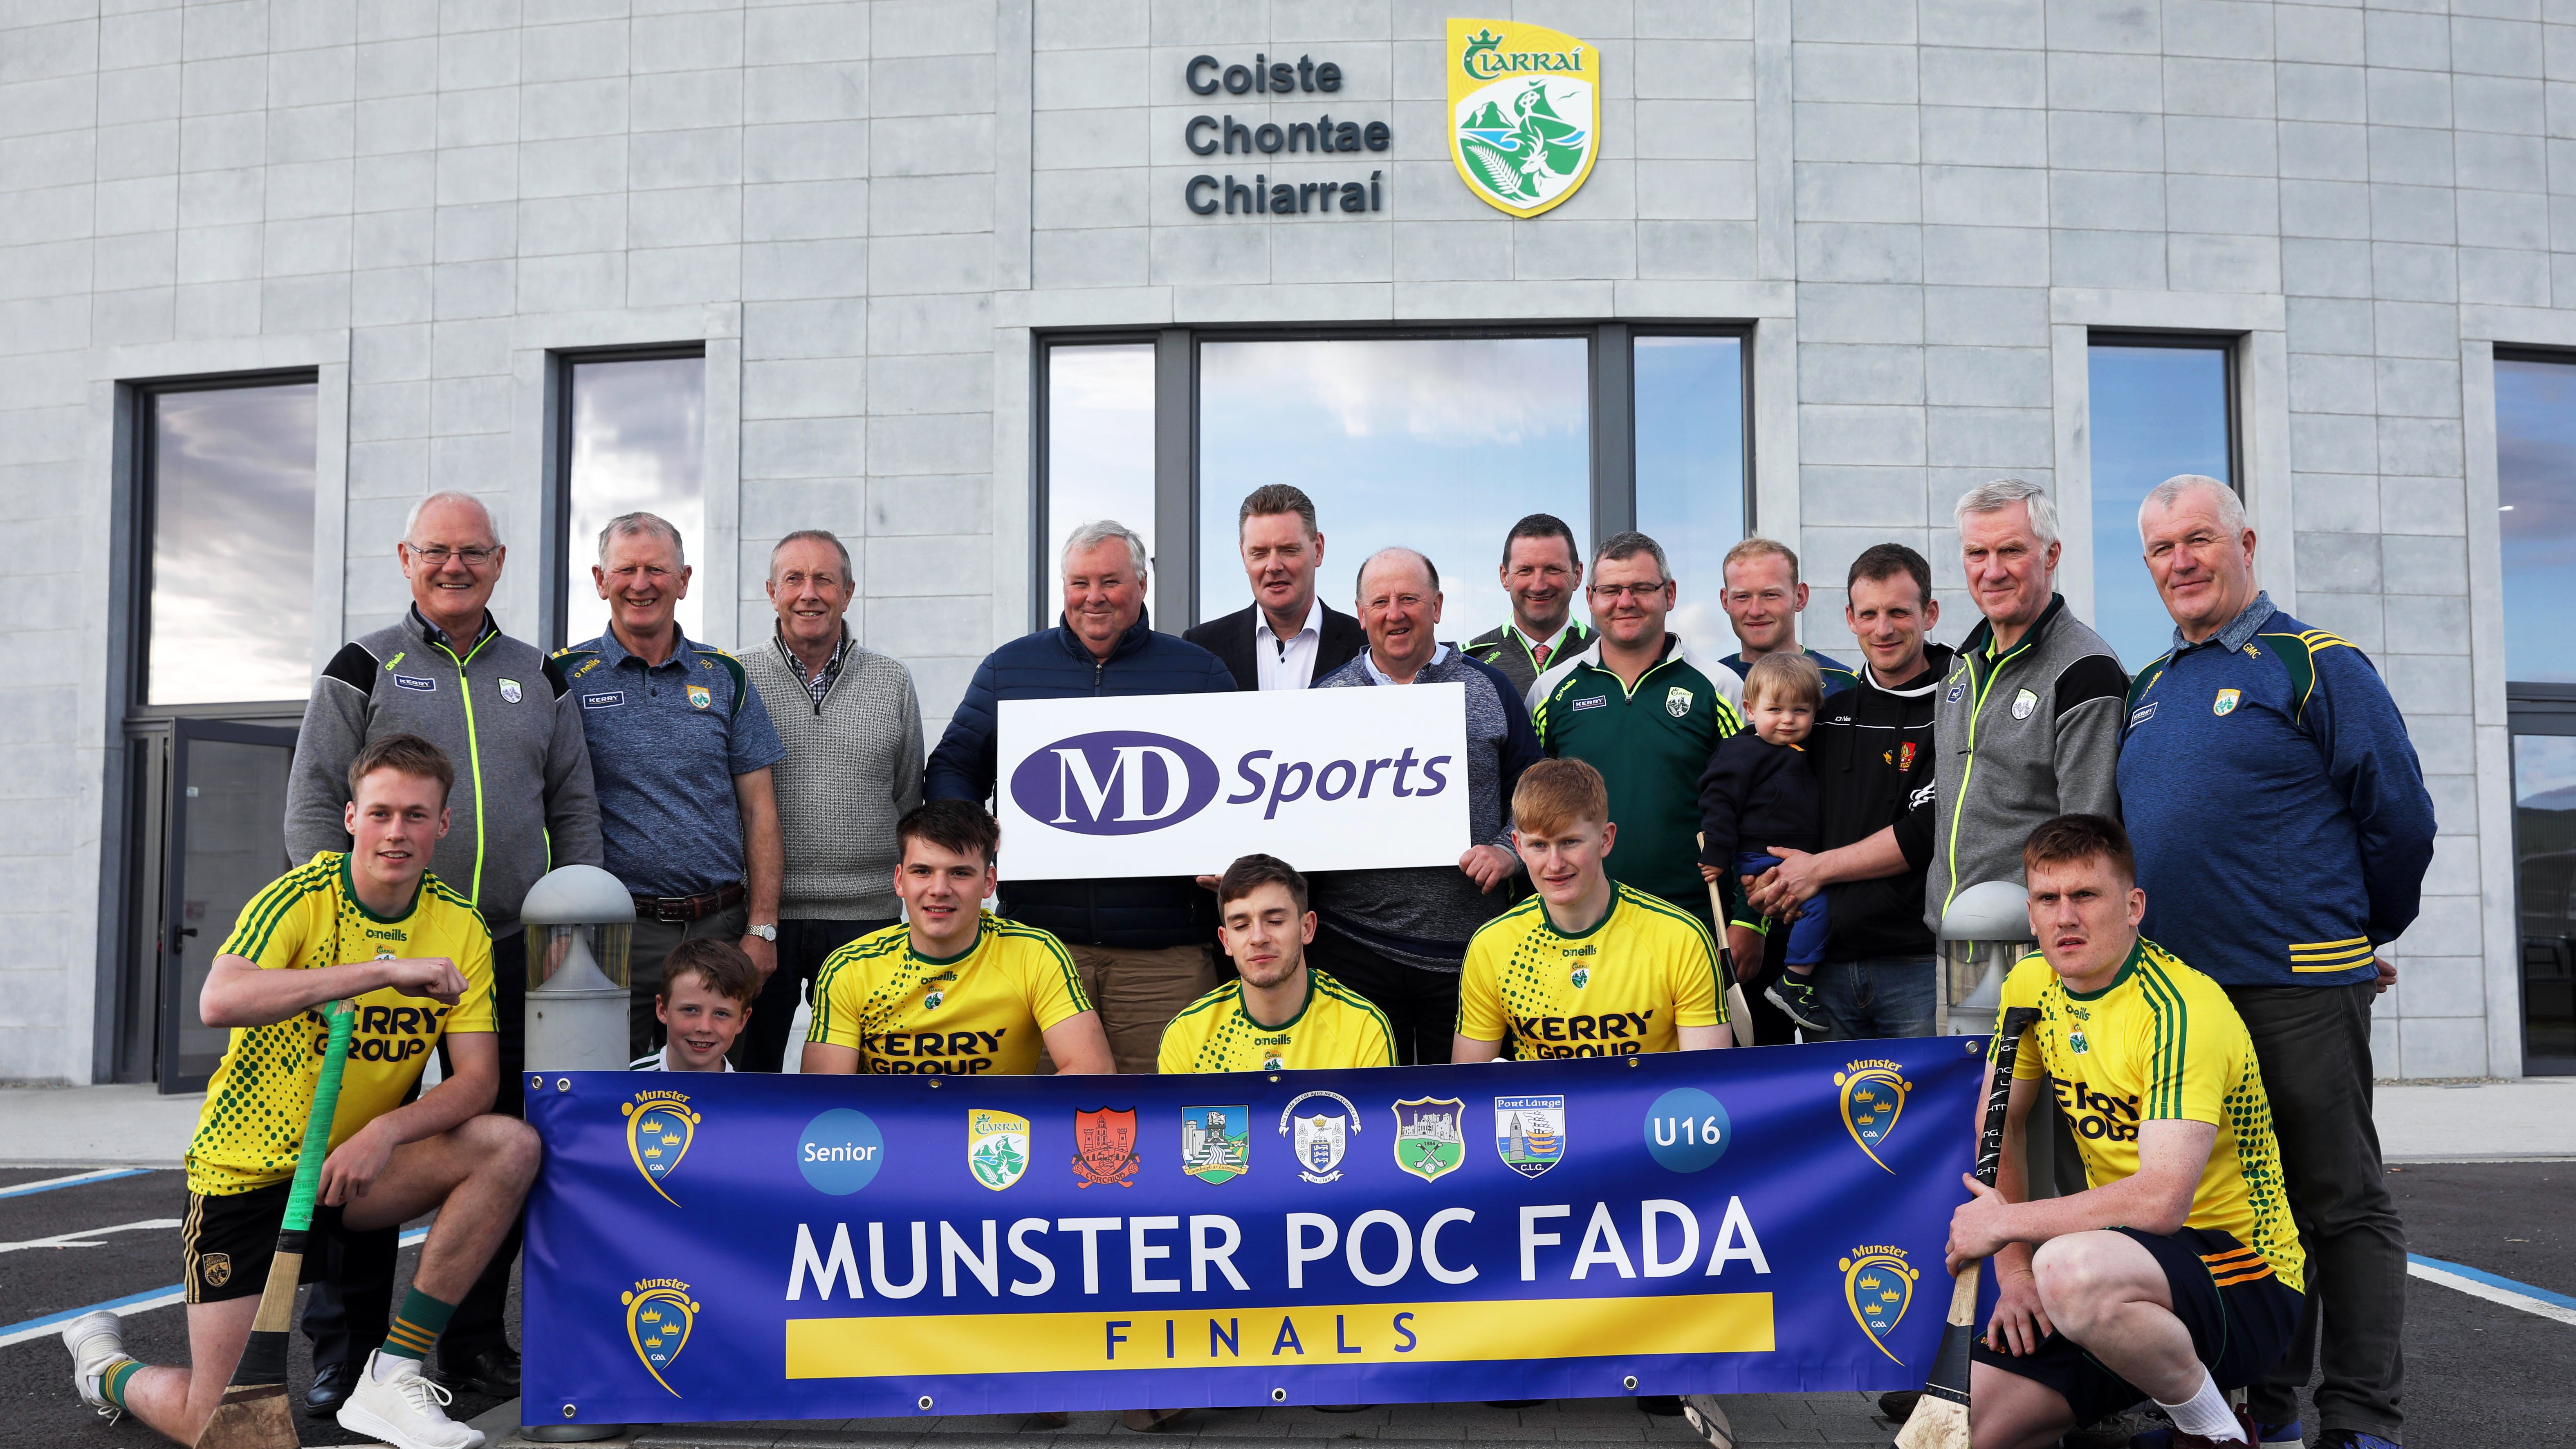 2019 Munster Poc Fada Launch